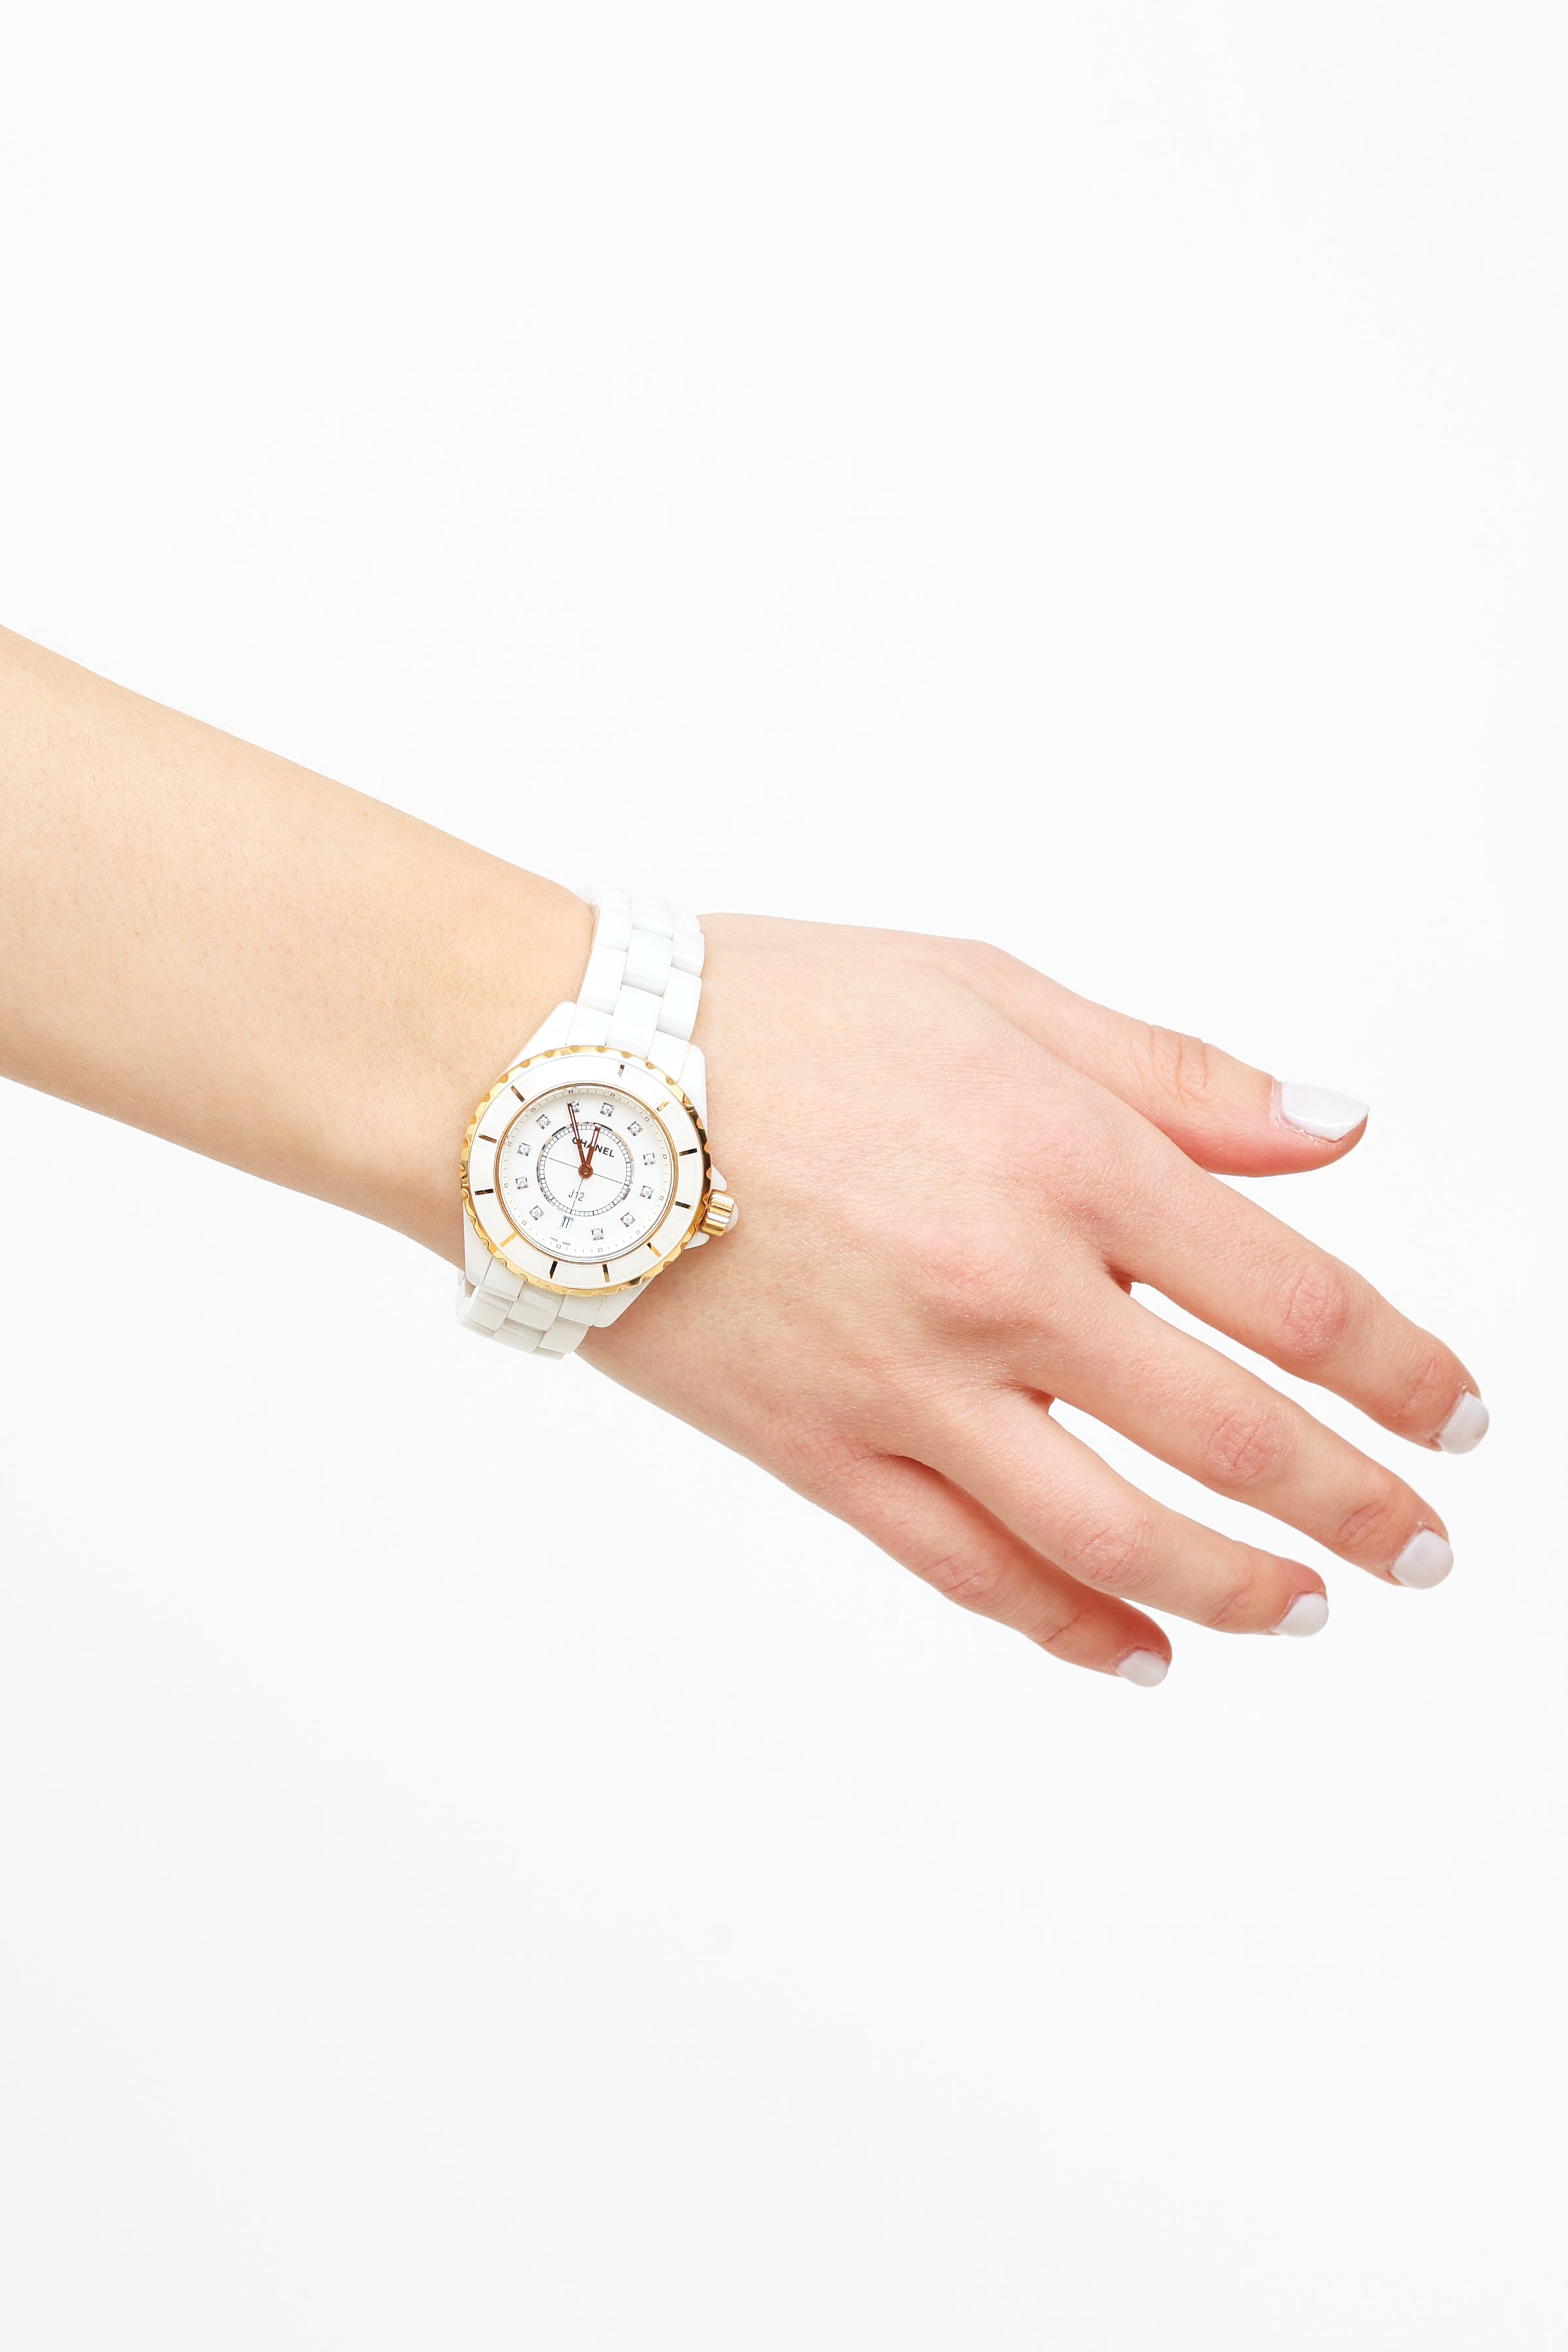 white j12 chanel watch